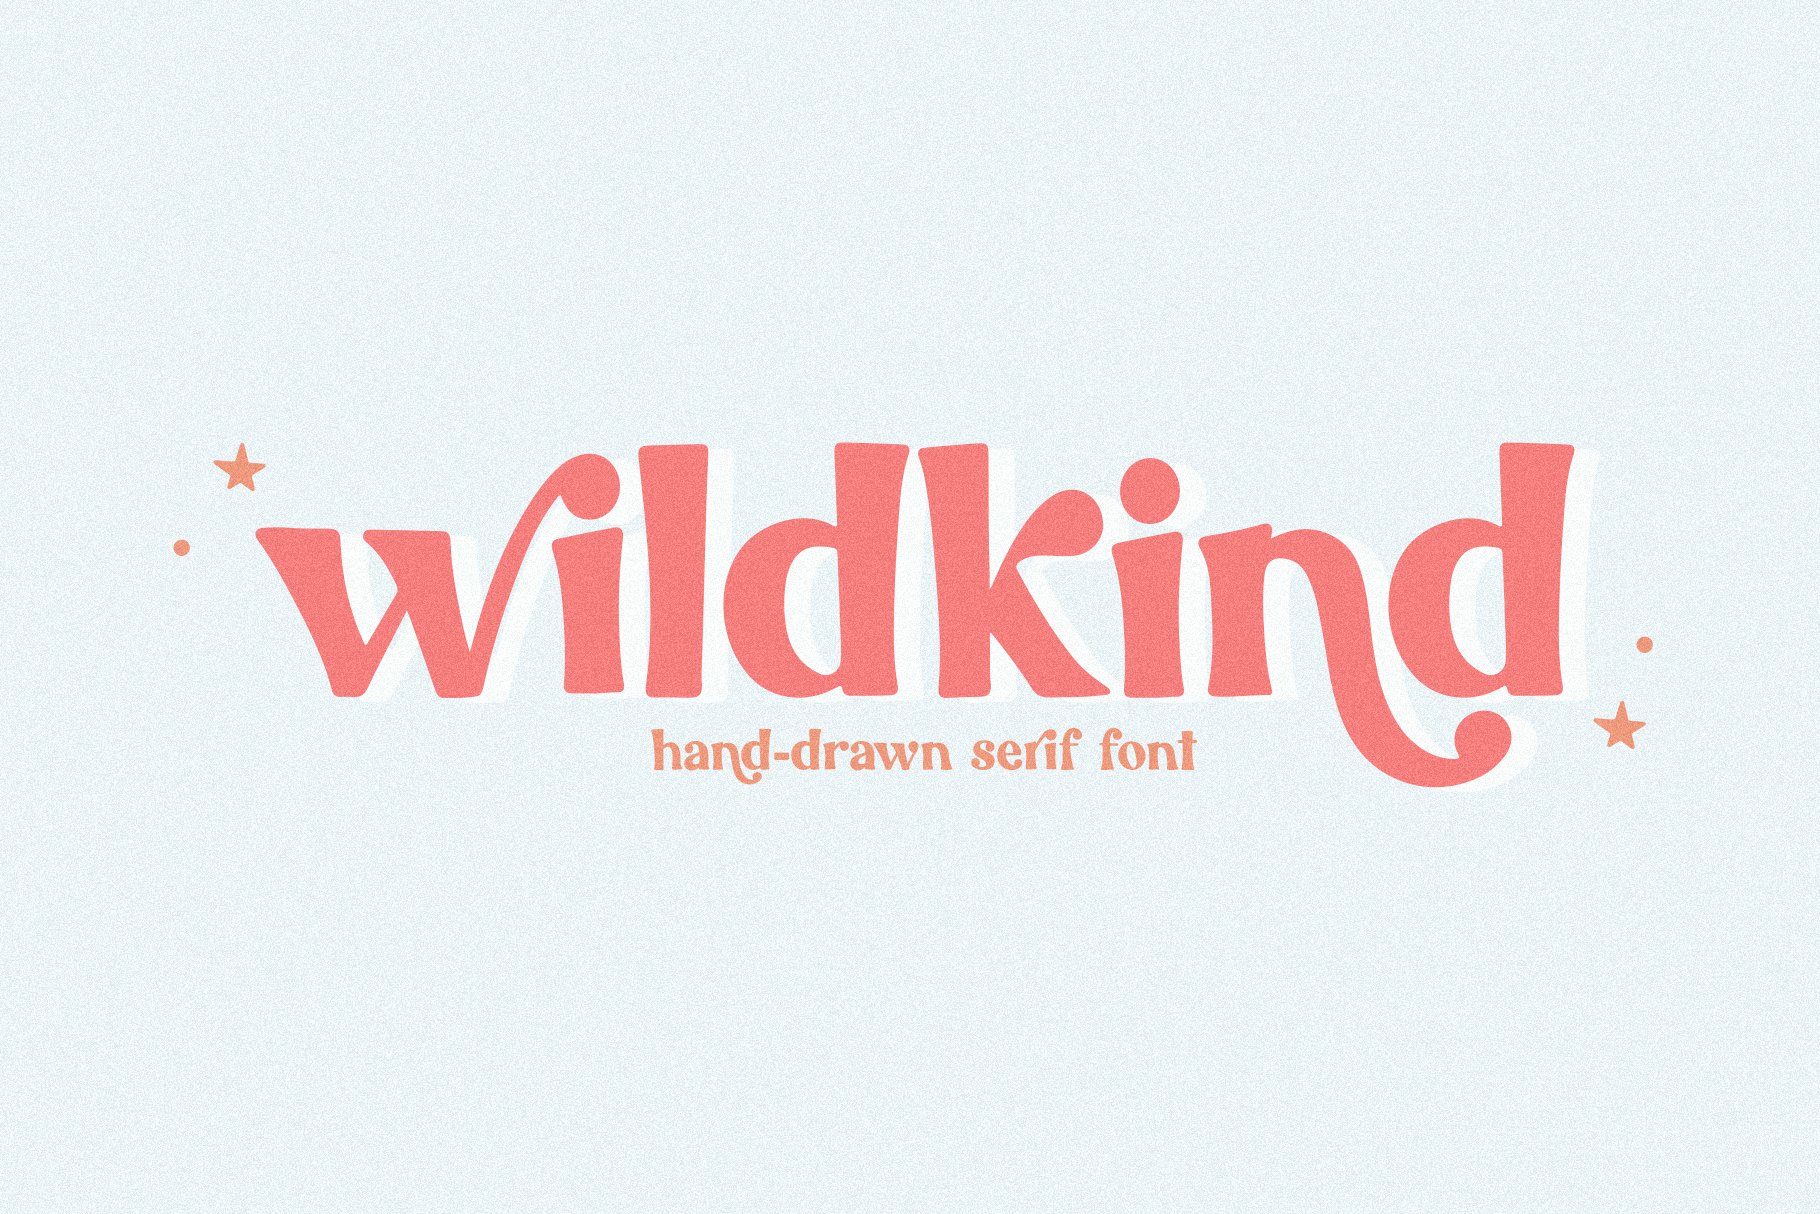 Wildkind | Boho Serif Font cover image.